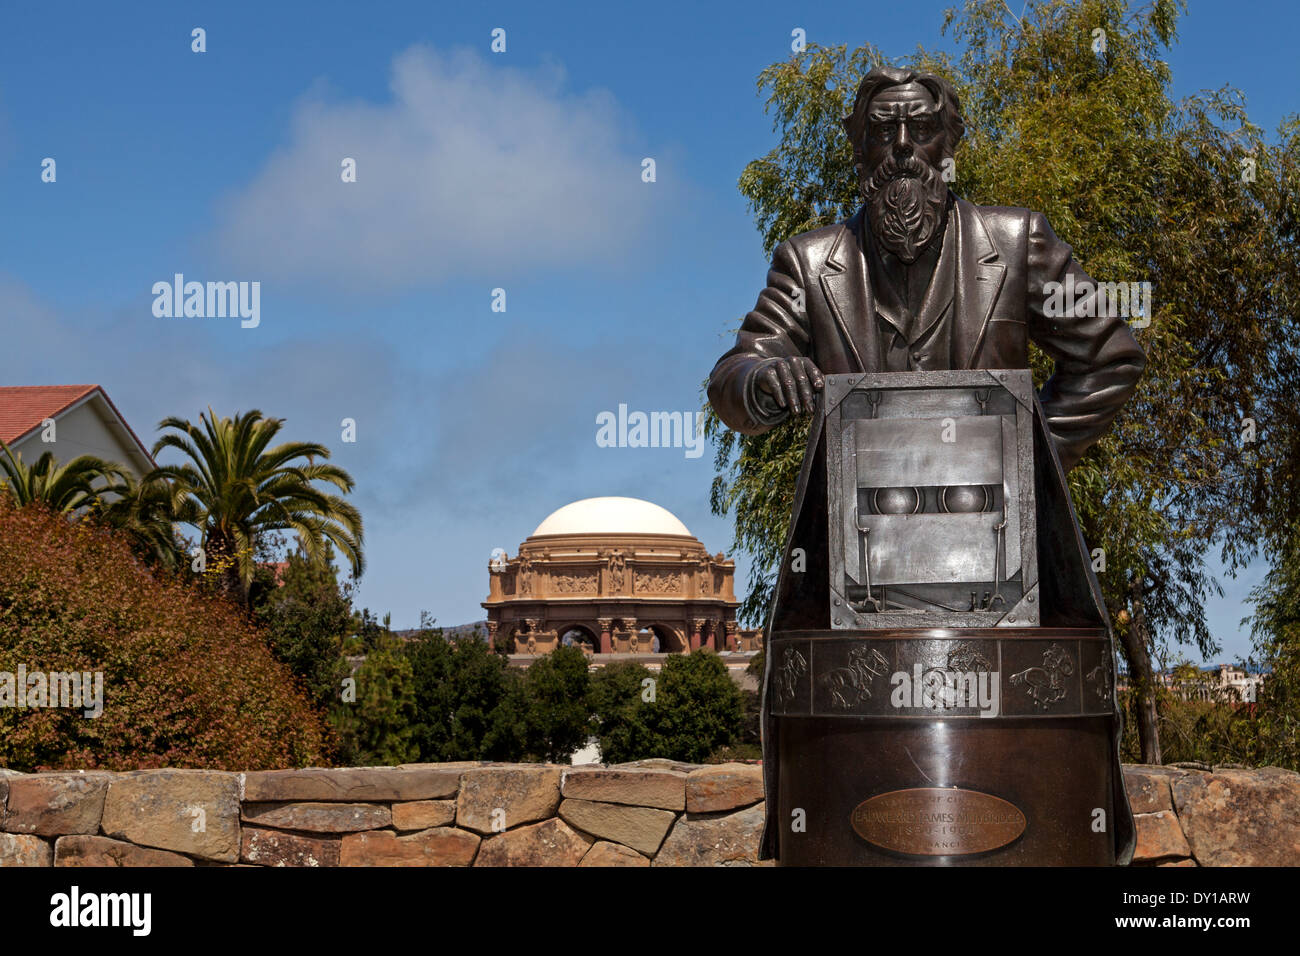 Statue of Eadweard James Muybridge at the Lucas Film Digital Art Center, San Francisco, California, USA Stock Photo